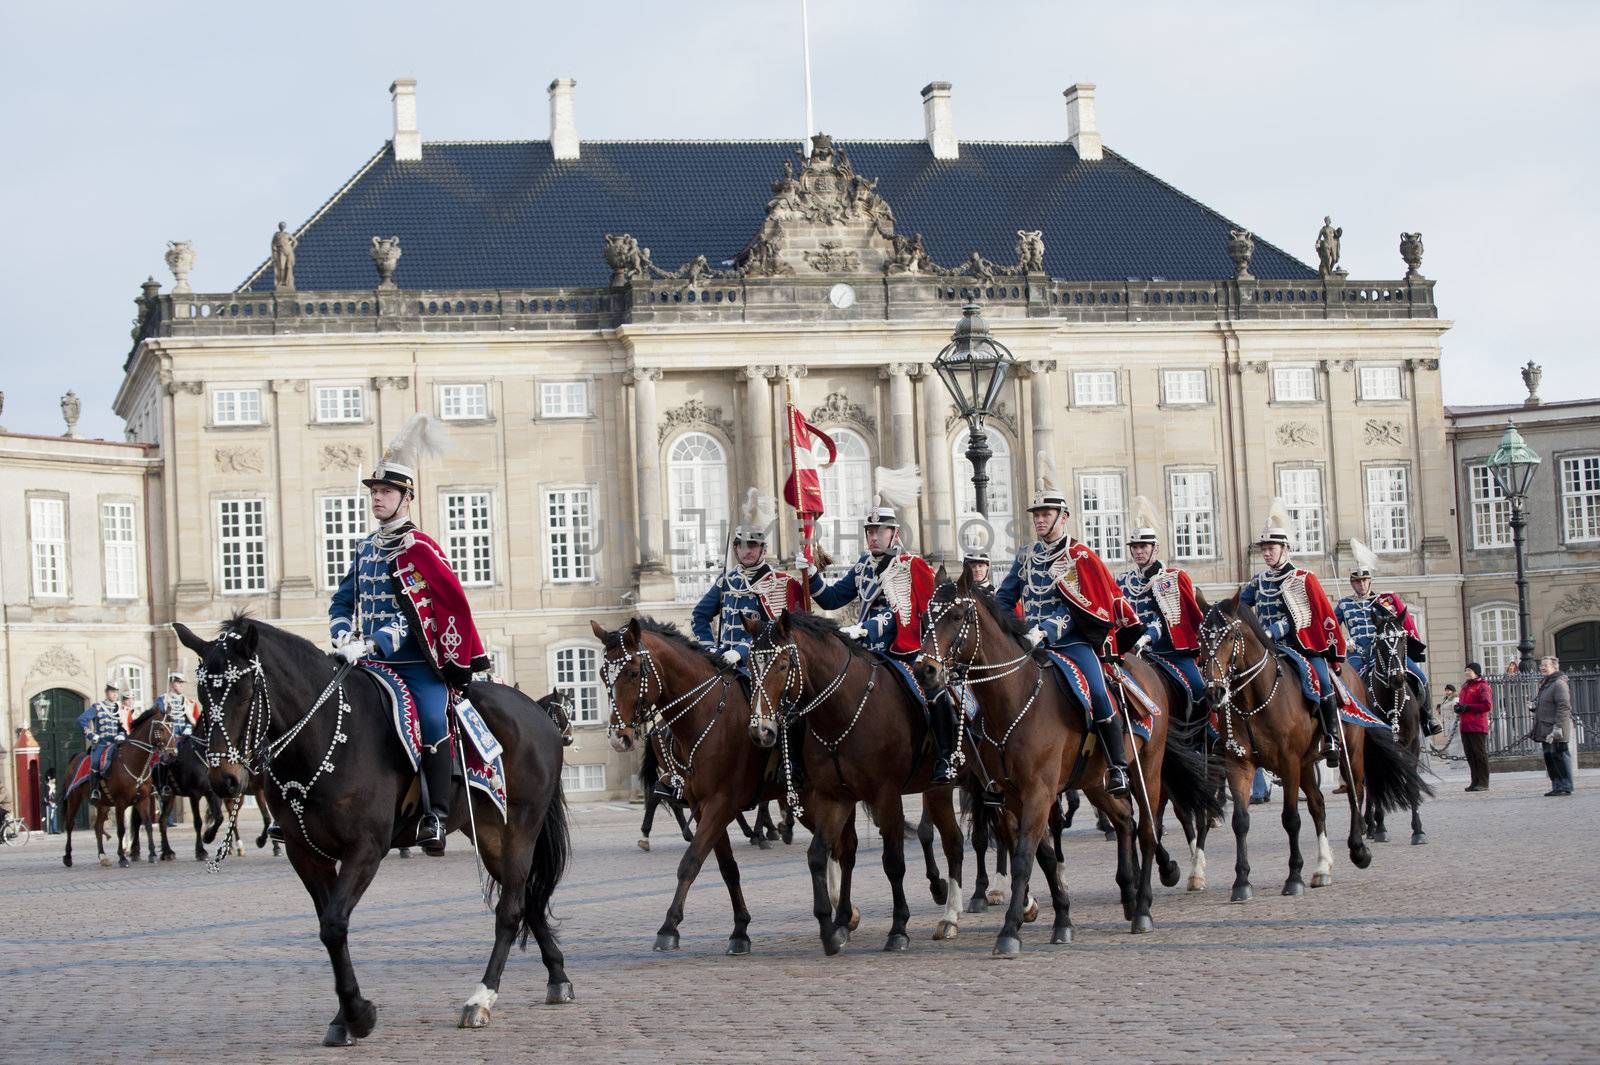 Royal Danish guard by Alenmax